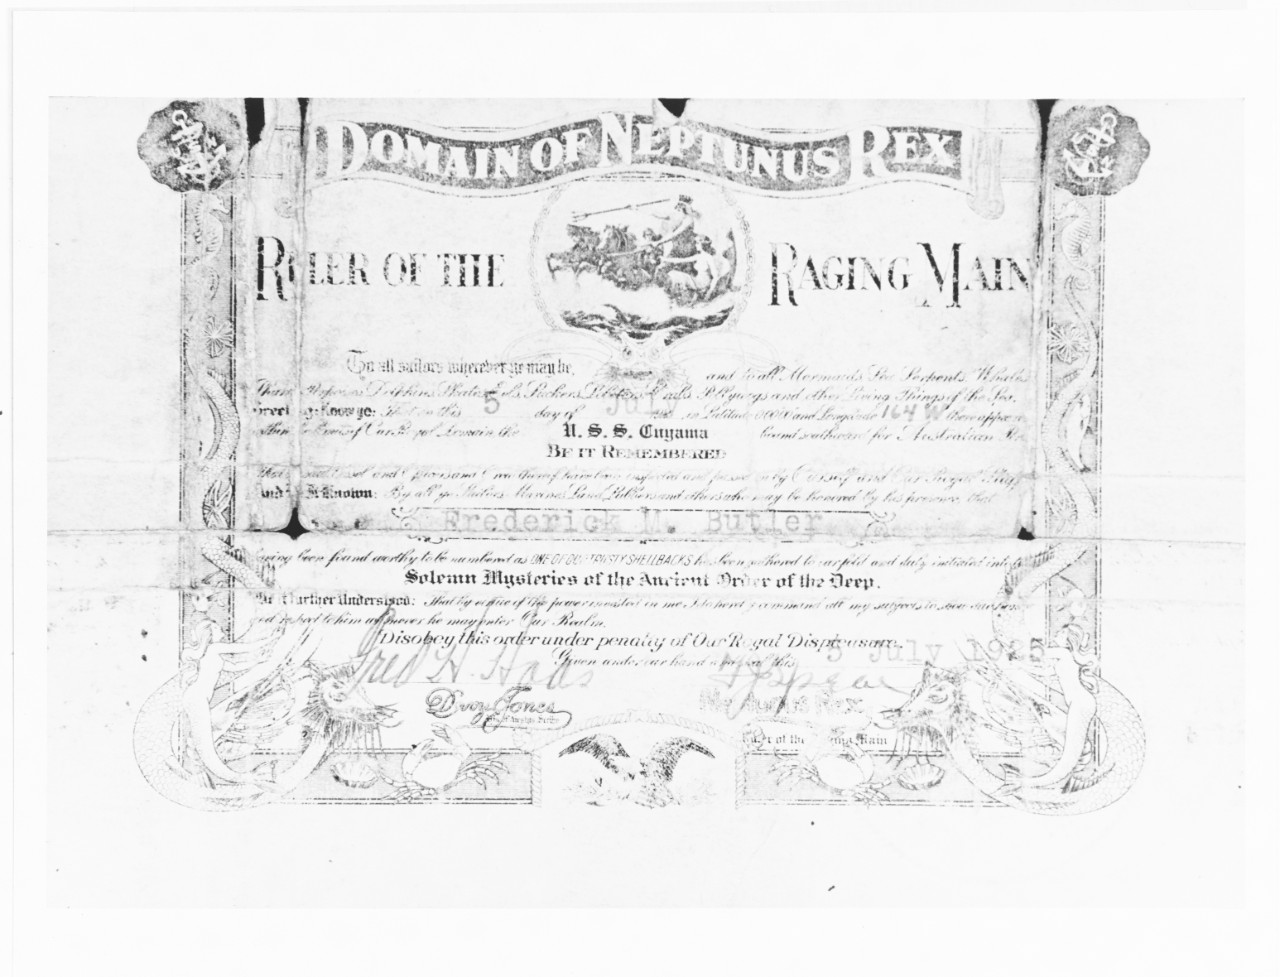 Neptune's Certificate